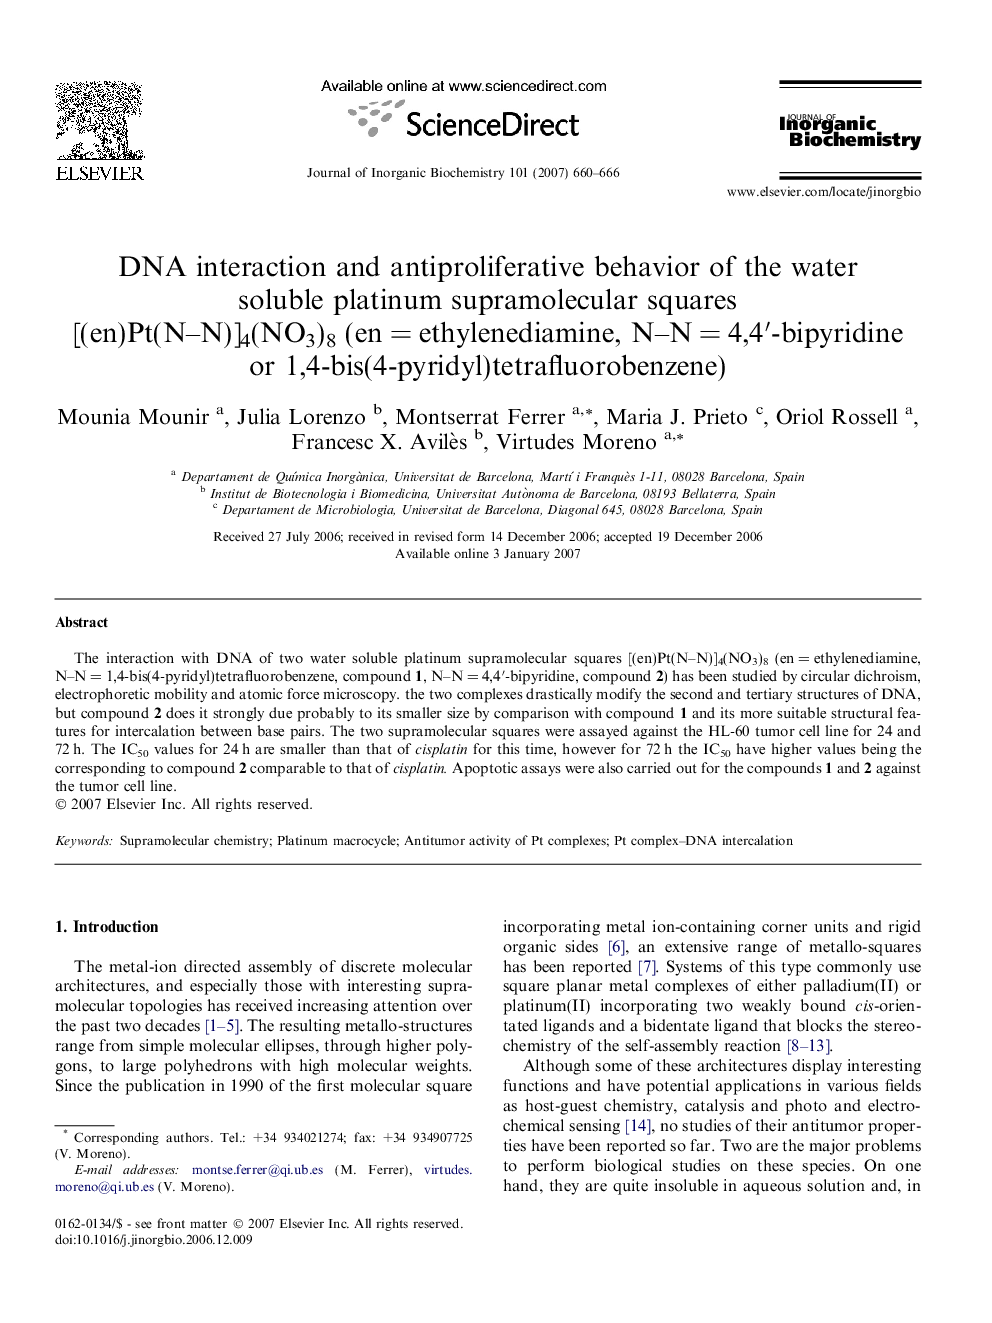 DNA interaction and antiproliferative behavior of the water soluble platinum supramolecular squares [(en)Pt(N–N)]4(NO3)8 (en = ethylenediamine, N–N = 4,4′-bipyridine or 1,4-bis(4-pyridyl)tetrafluorobenzene)